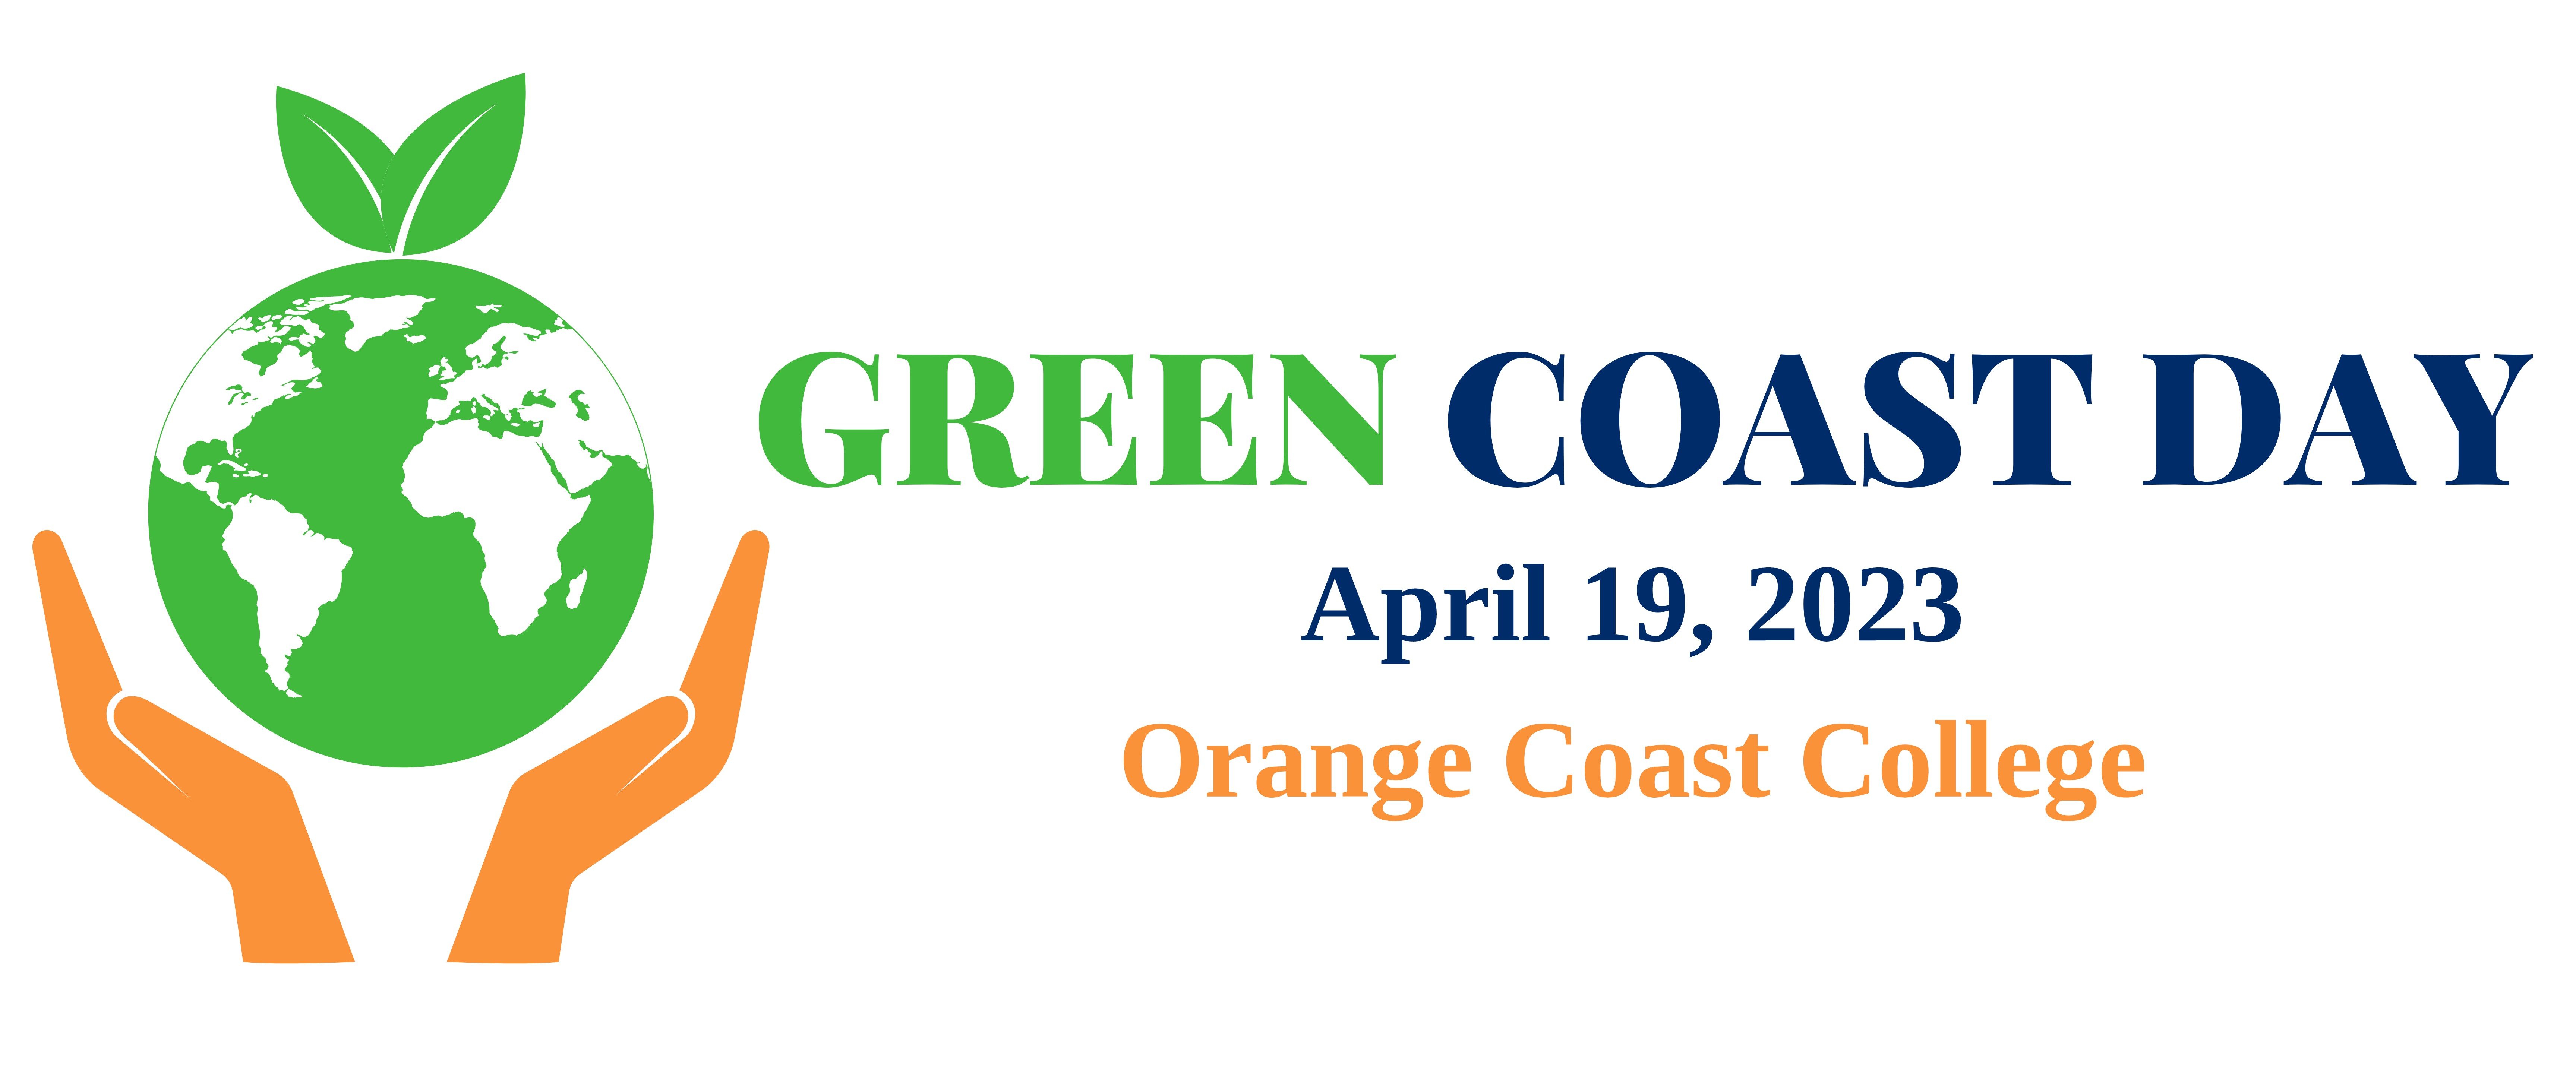 Green Coast Day Site